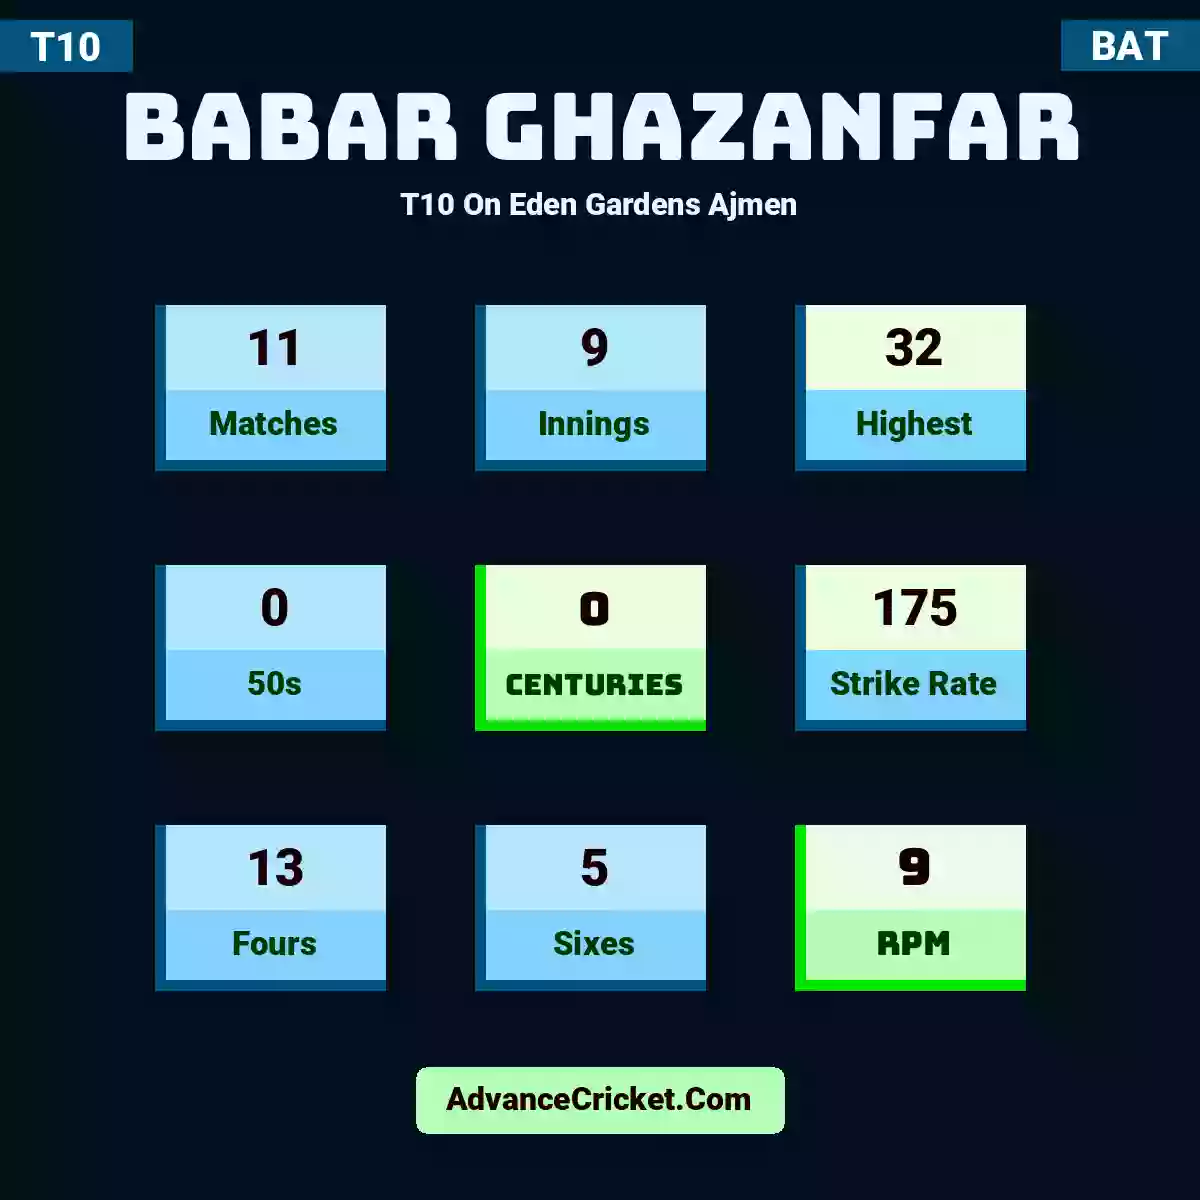 Babar Ghazanfar T10  On Eden Gardens Ajmen, Babar Ghazanfar played 11 matches, scored 32 runs as highest, 0 half-centuries, and 0 centuries, with a strike rate of 175. B.Ghazanfar hit 13 fours and 5 sixes, with an RPM of 9.